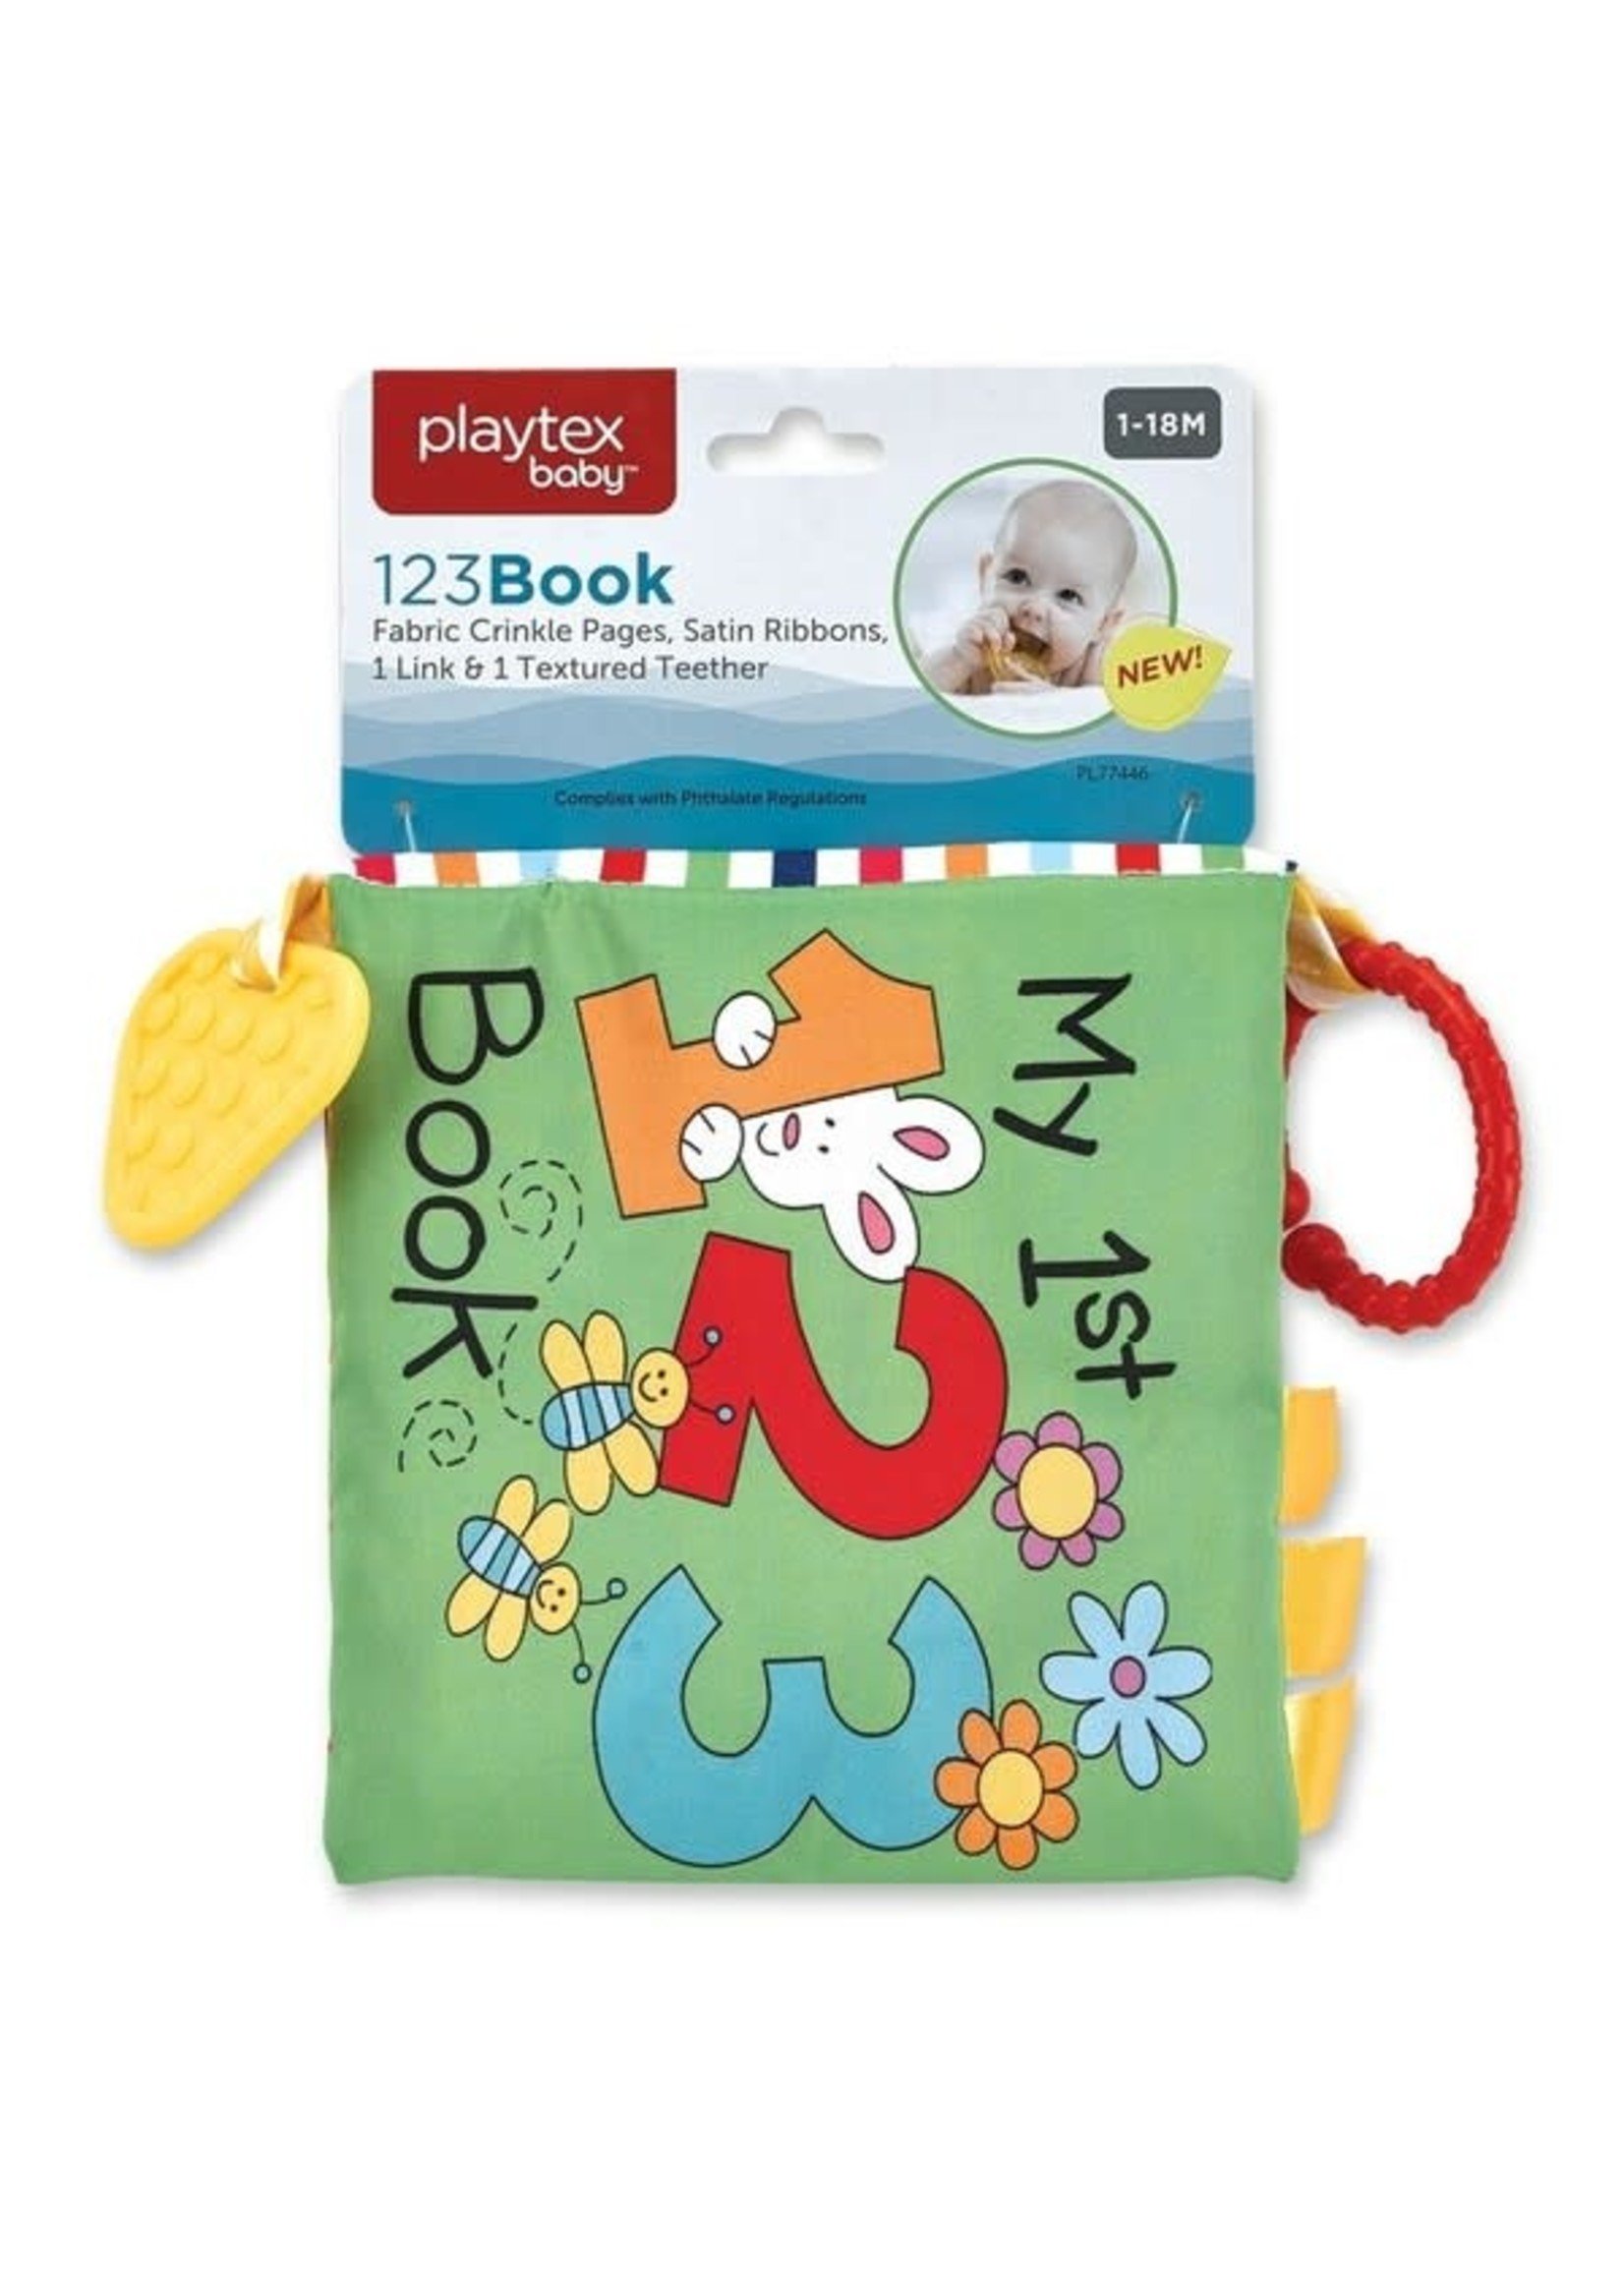 Playtex Baby's First Teething Book 123's